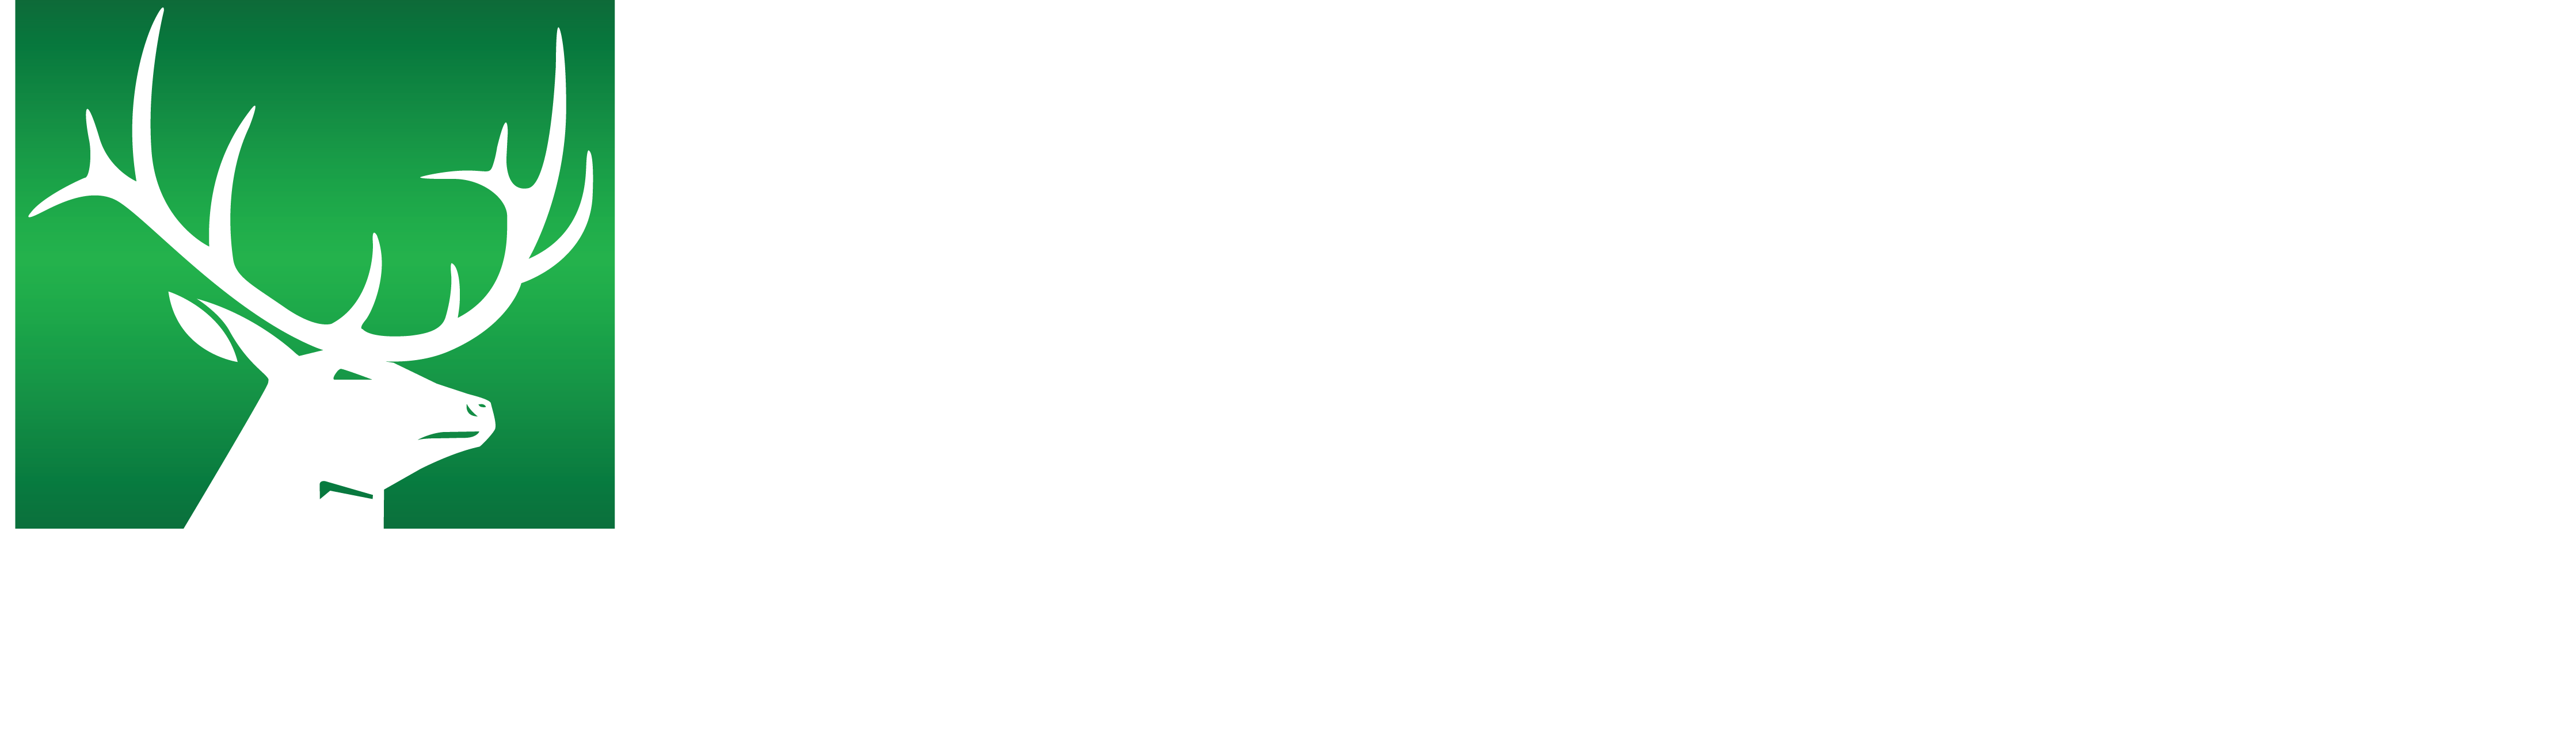 ELK Roofing, Solar, Exteriors - Denver Roofers